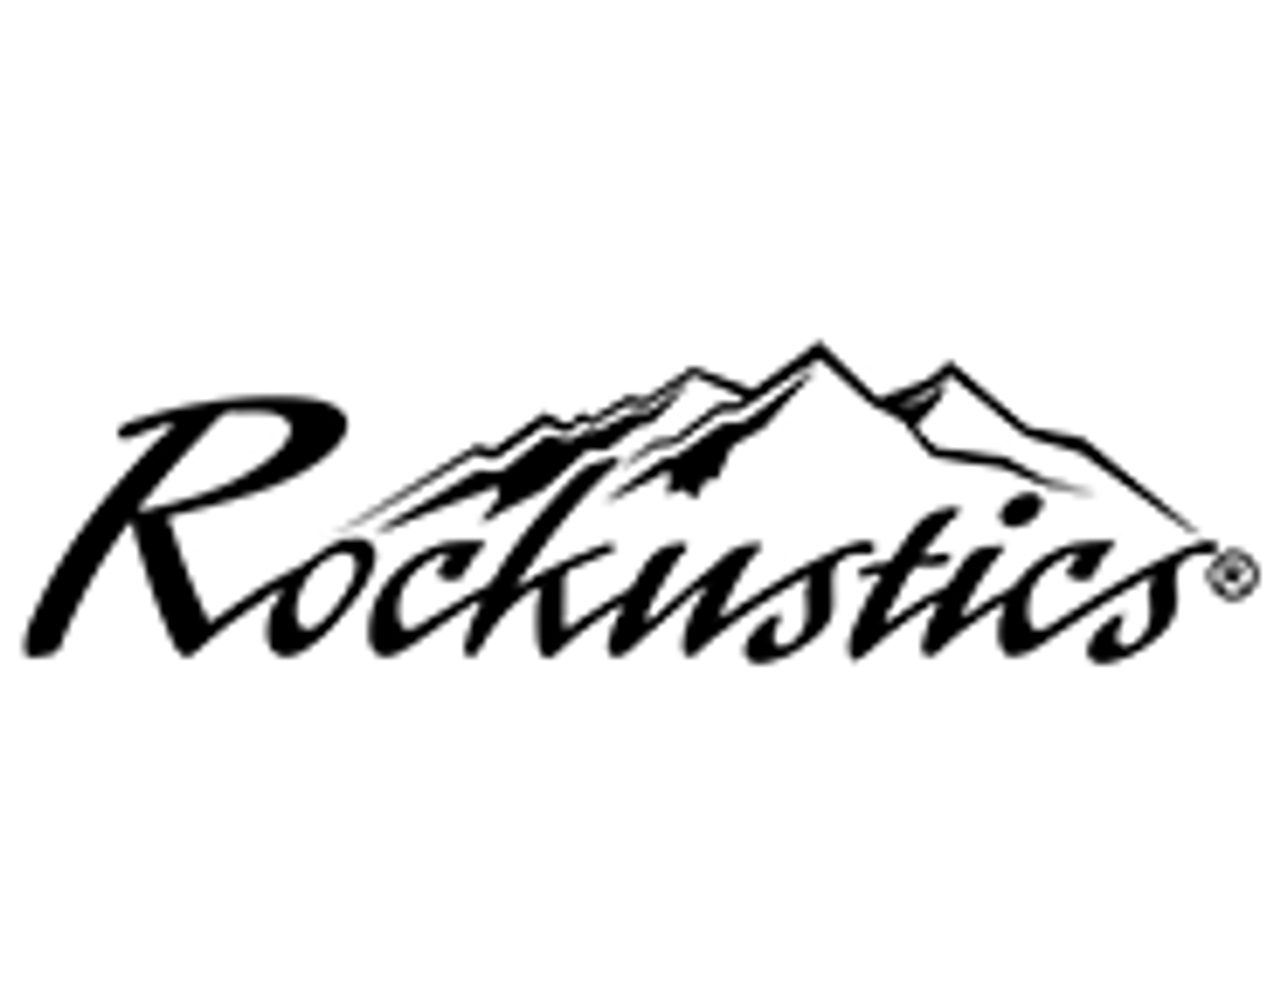 Rockustics